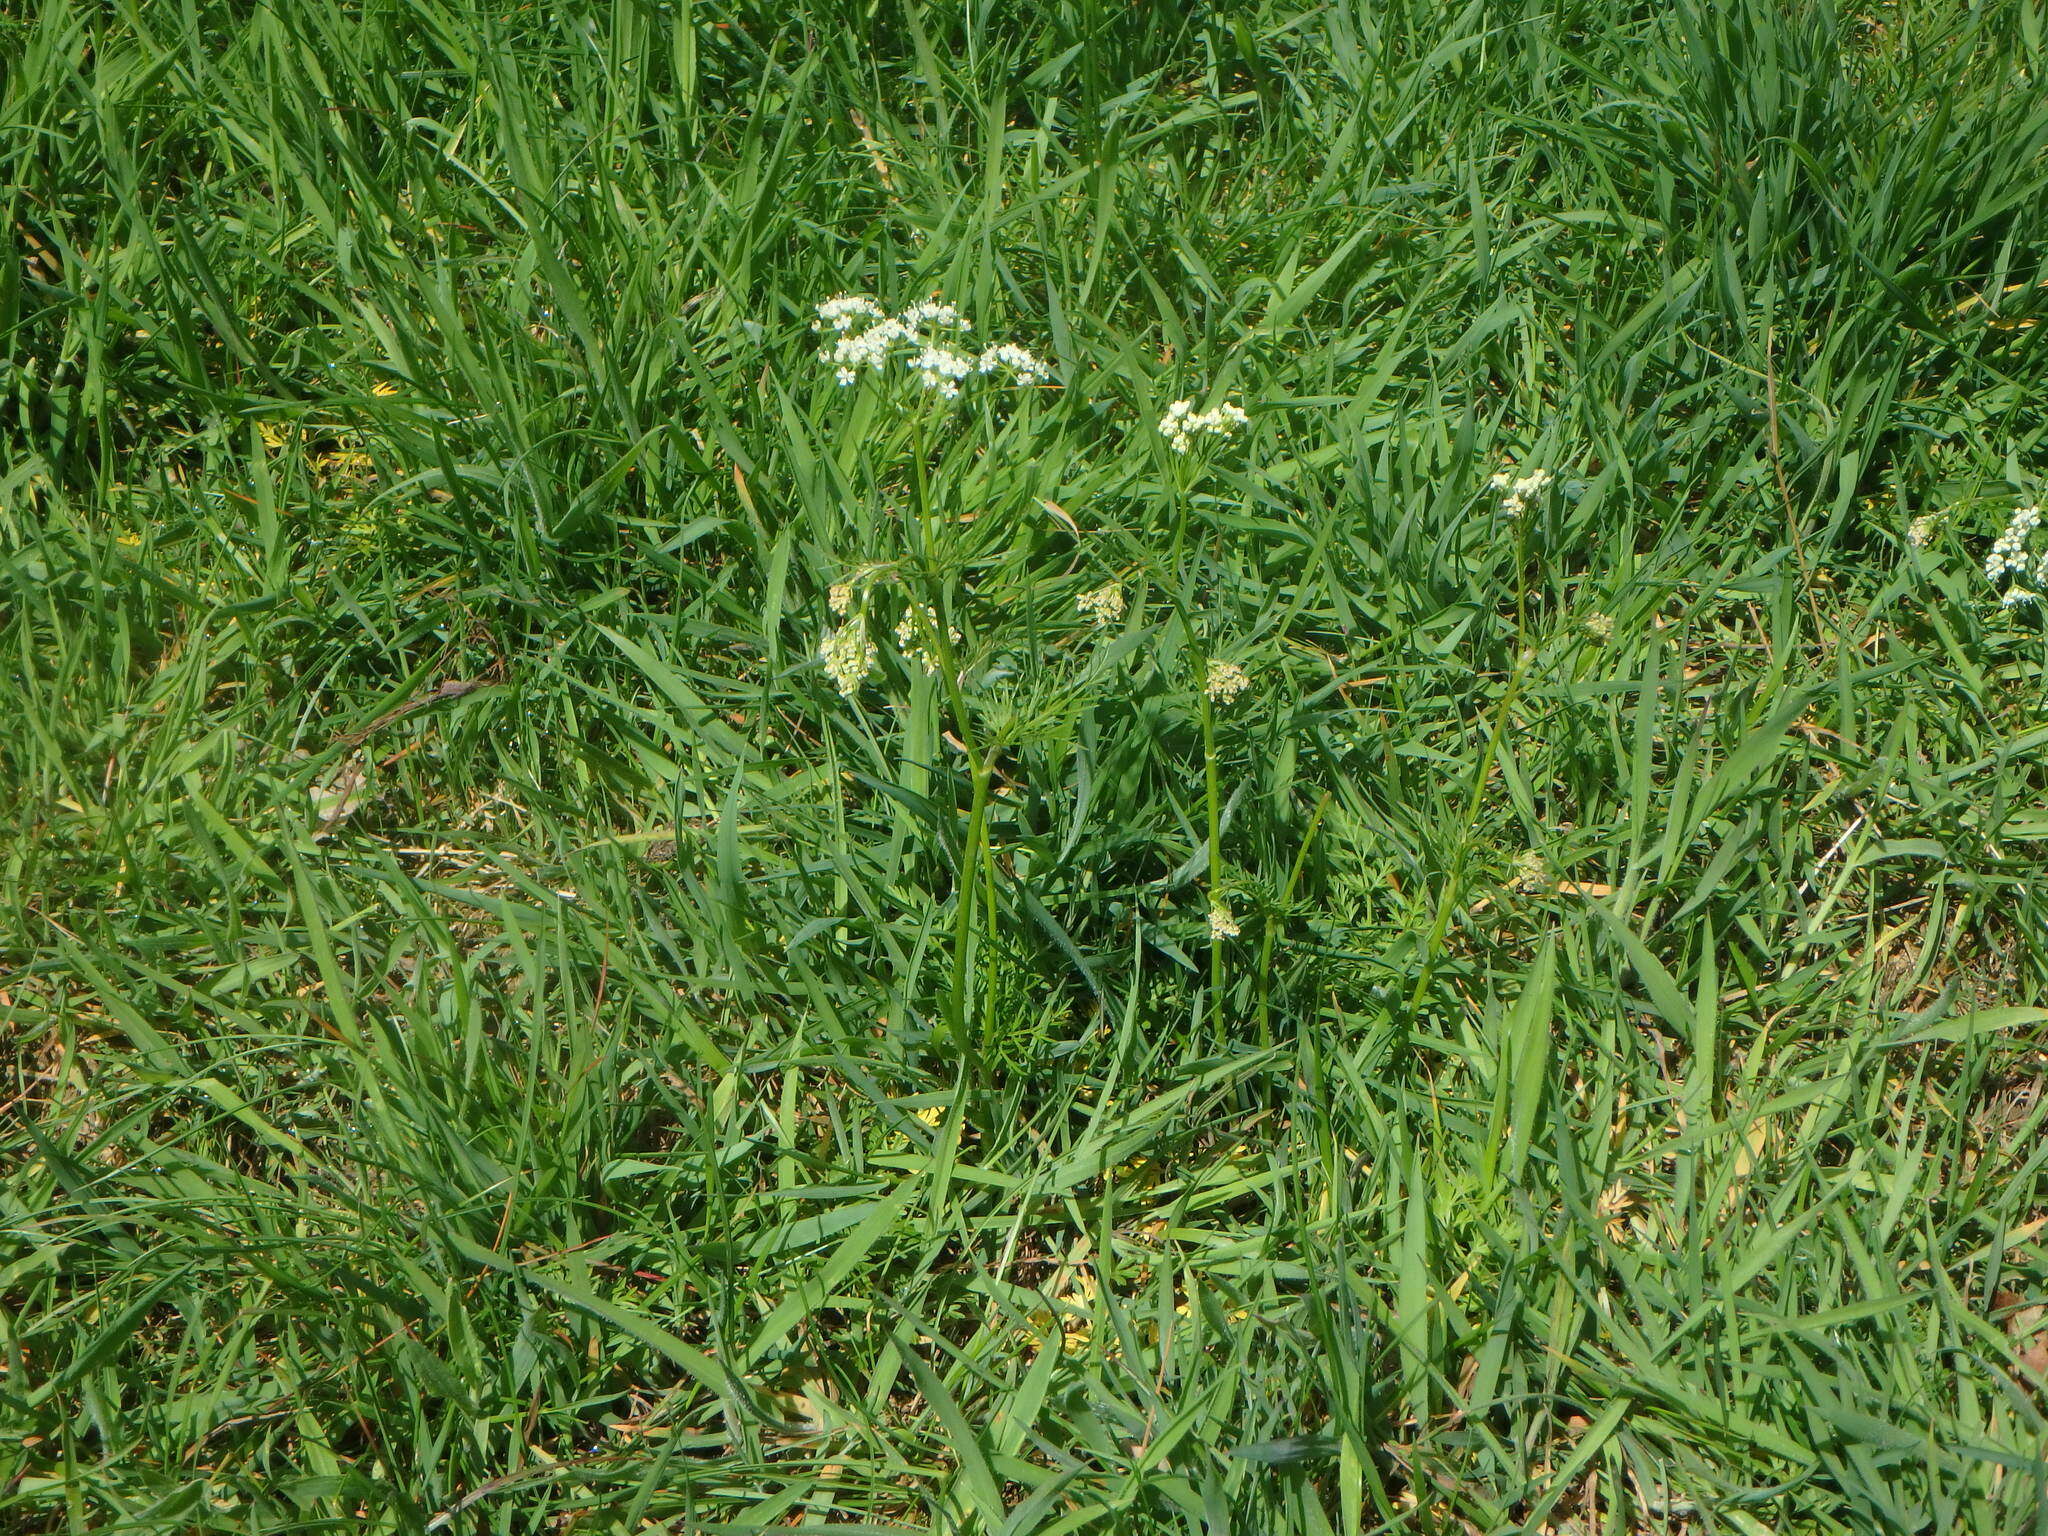 Image of Conopodium